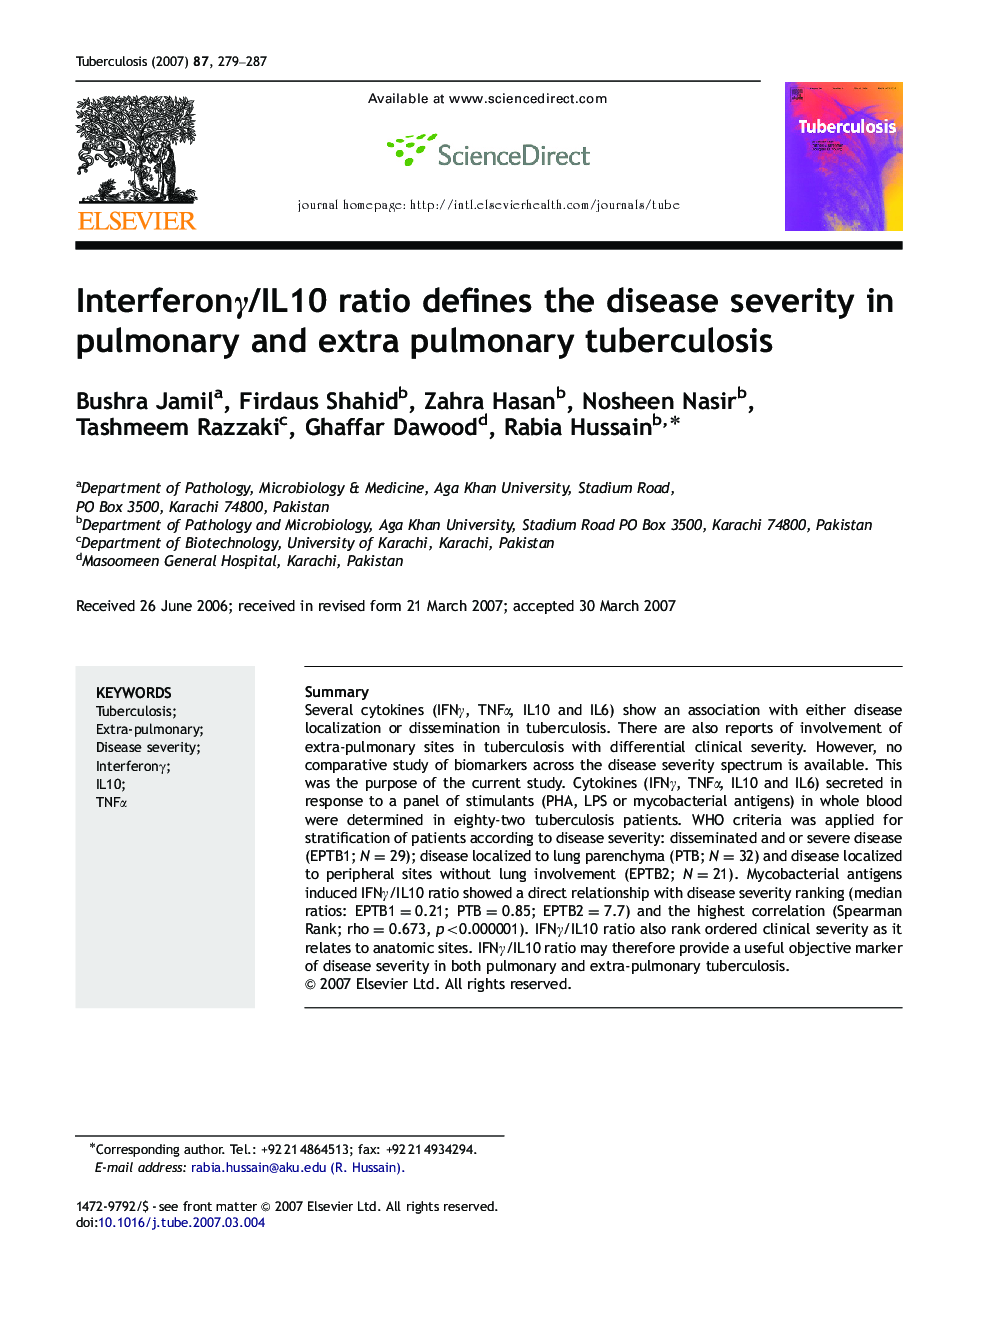 InterferonÎ³/IL10 ratio defines the disease severity in pulmonary and extra pulmonary tuberculosis